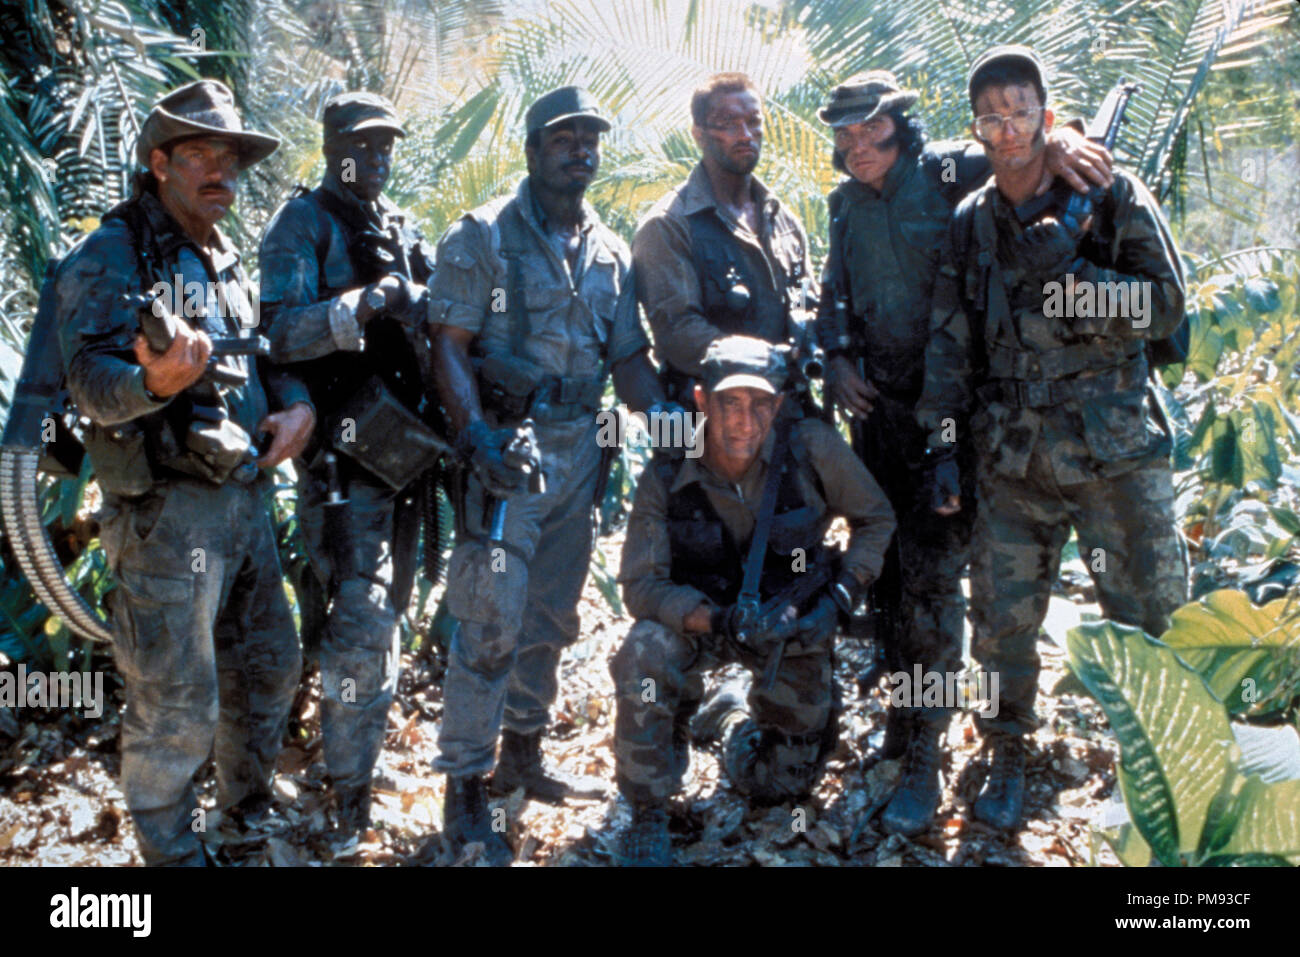 Team Commando - Arnold Schwarzenegger in “Predator” (1987).